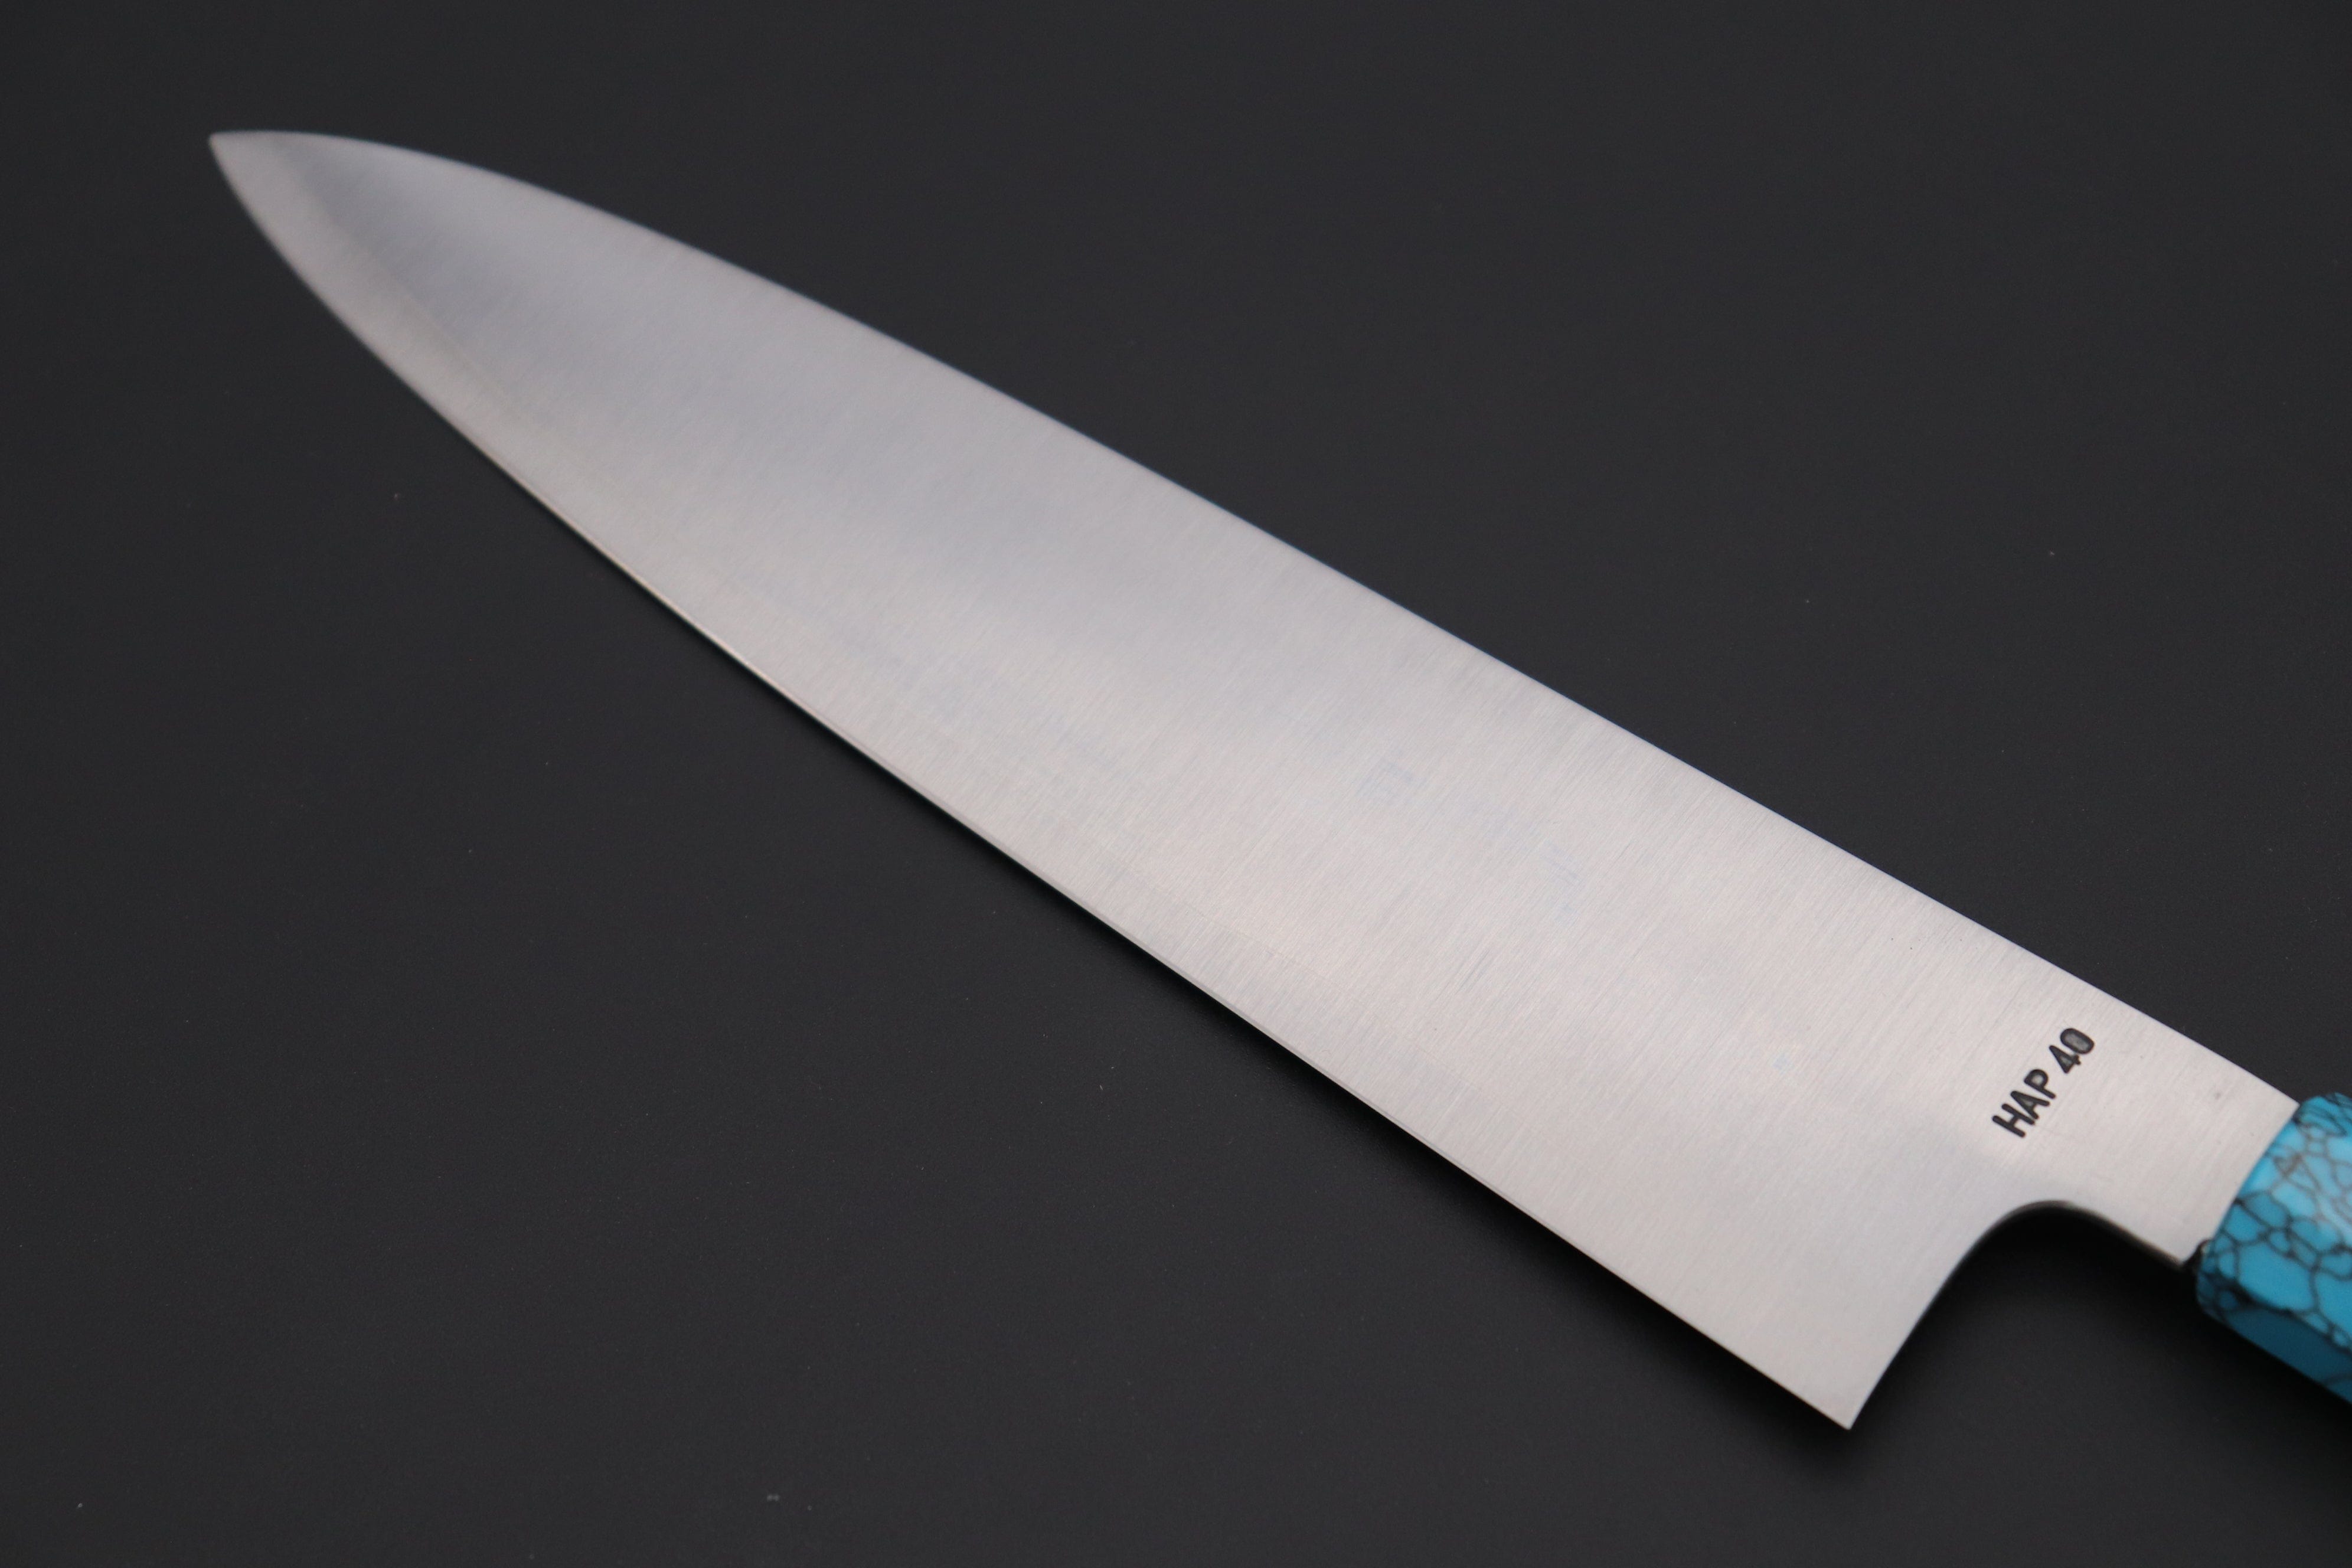 Knife set 4 KAI GYUTO SANTOKU hammered Stainless steel IMAYO Japan - Osaka  Tools